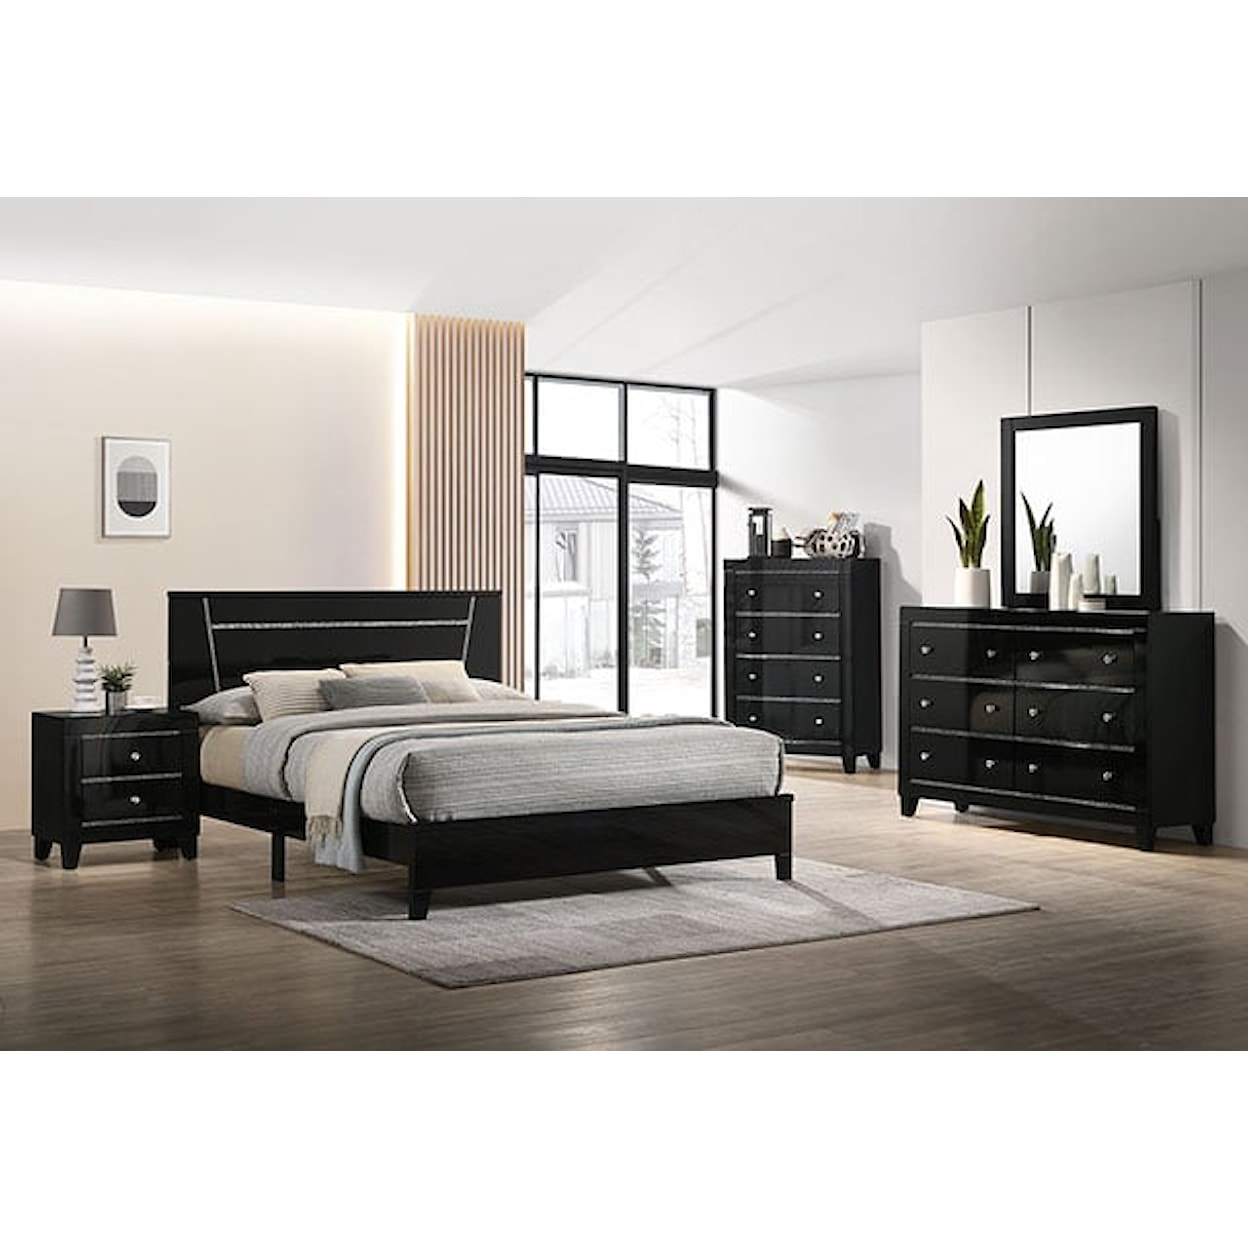 Furniture of America Magdeburg Black 4-Drawer Bedroom Chest